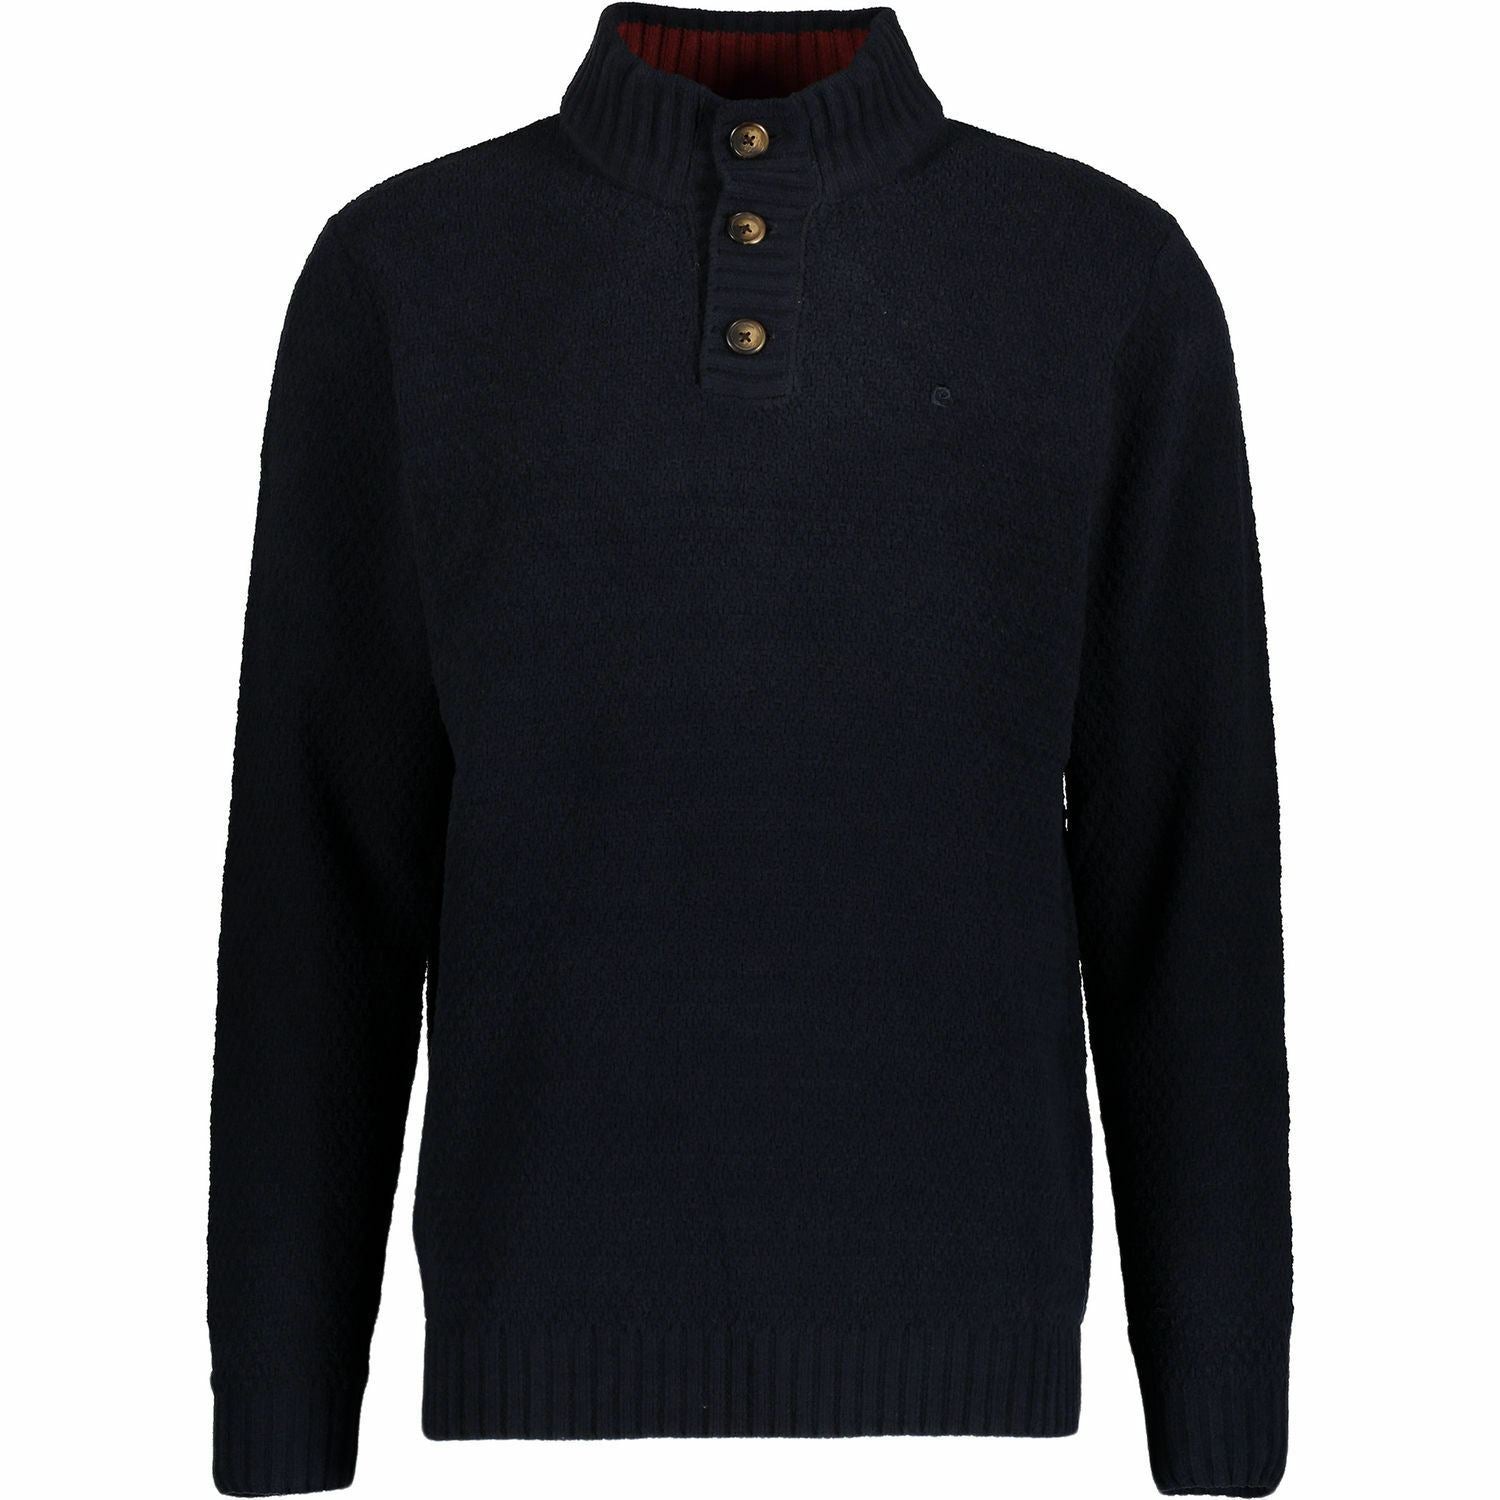 PIERRE CARDIN Men's Navy Blue Soft Knitted Jumper - size S